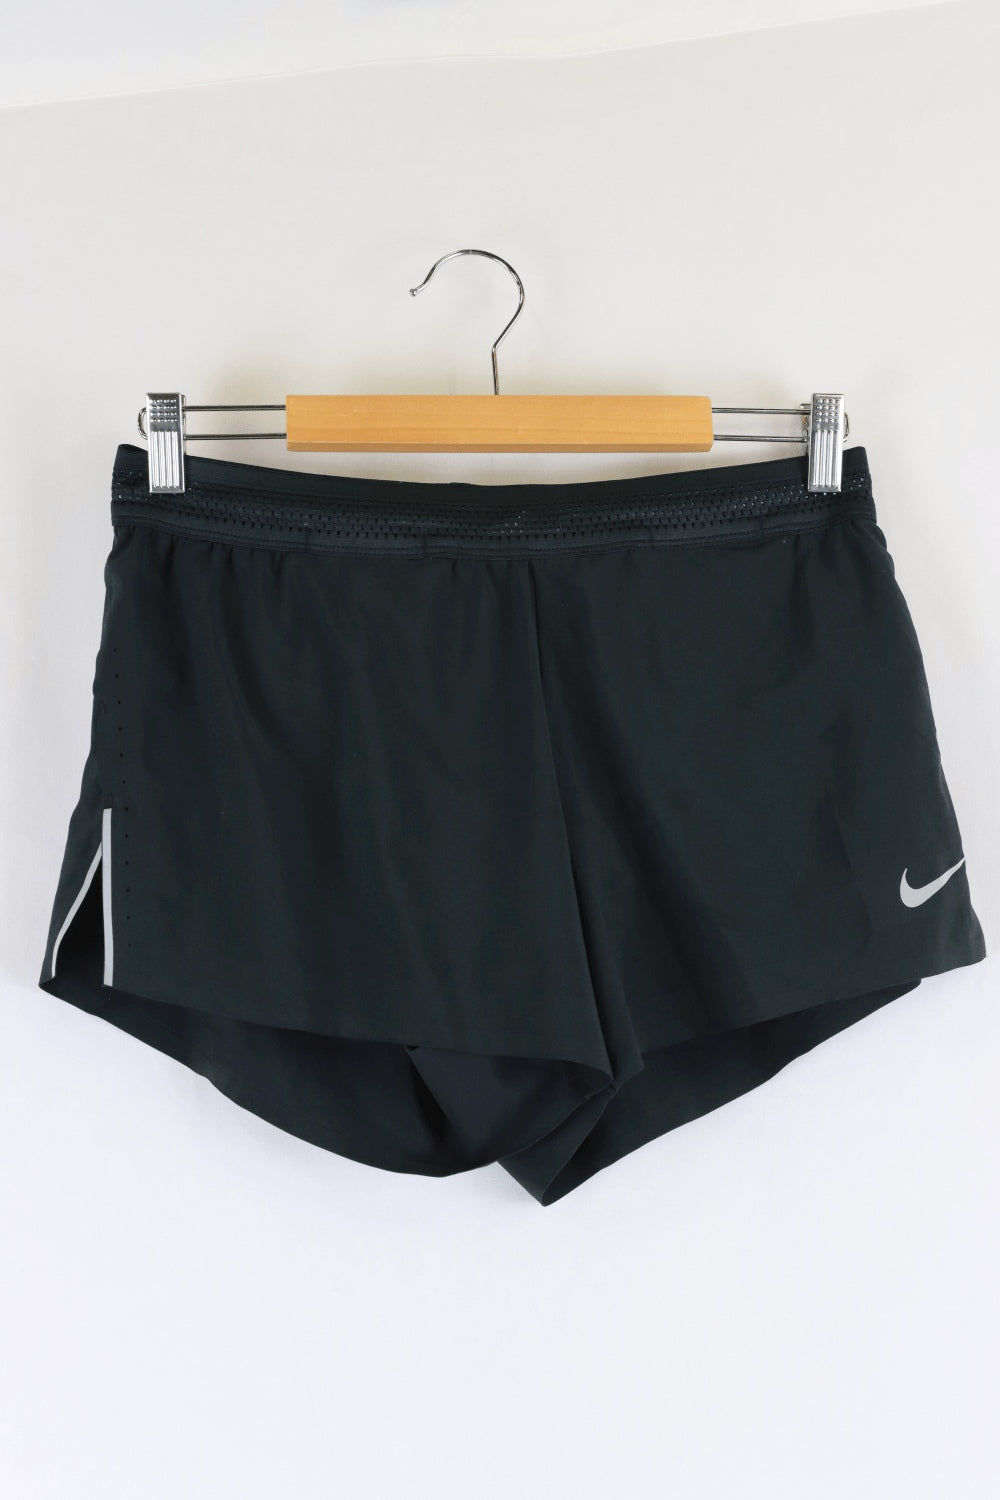 Nike Black Shorts S